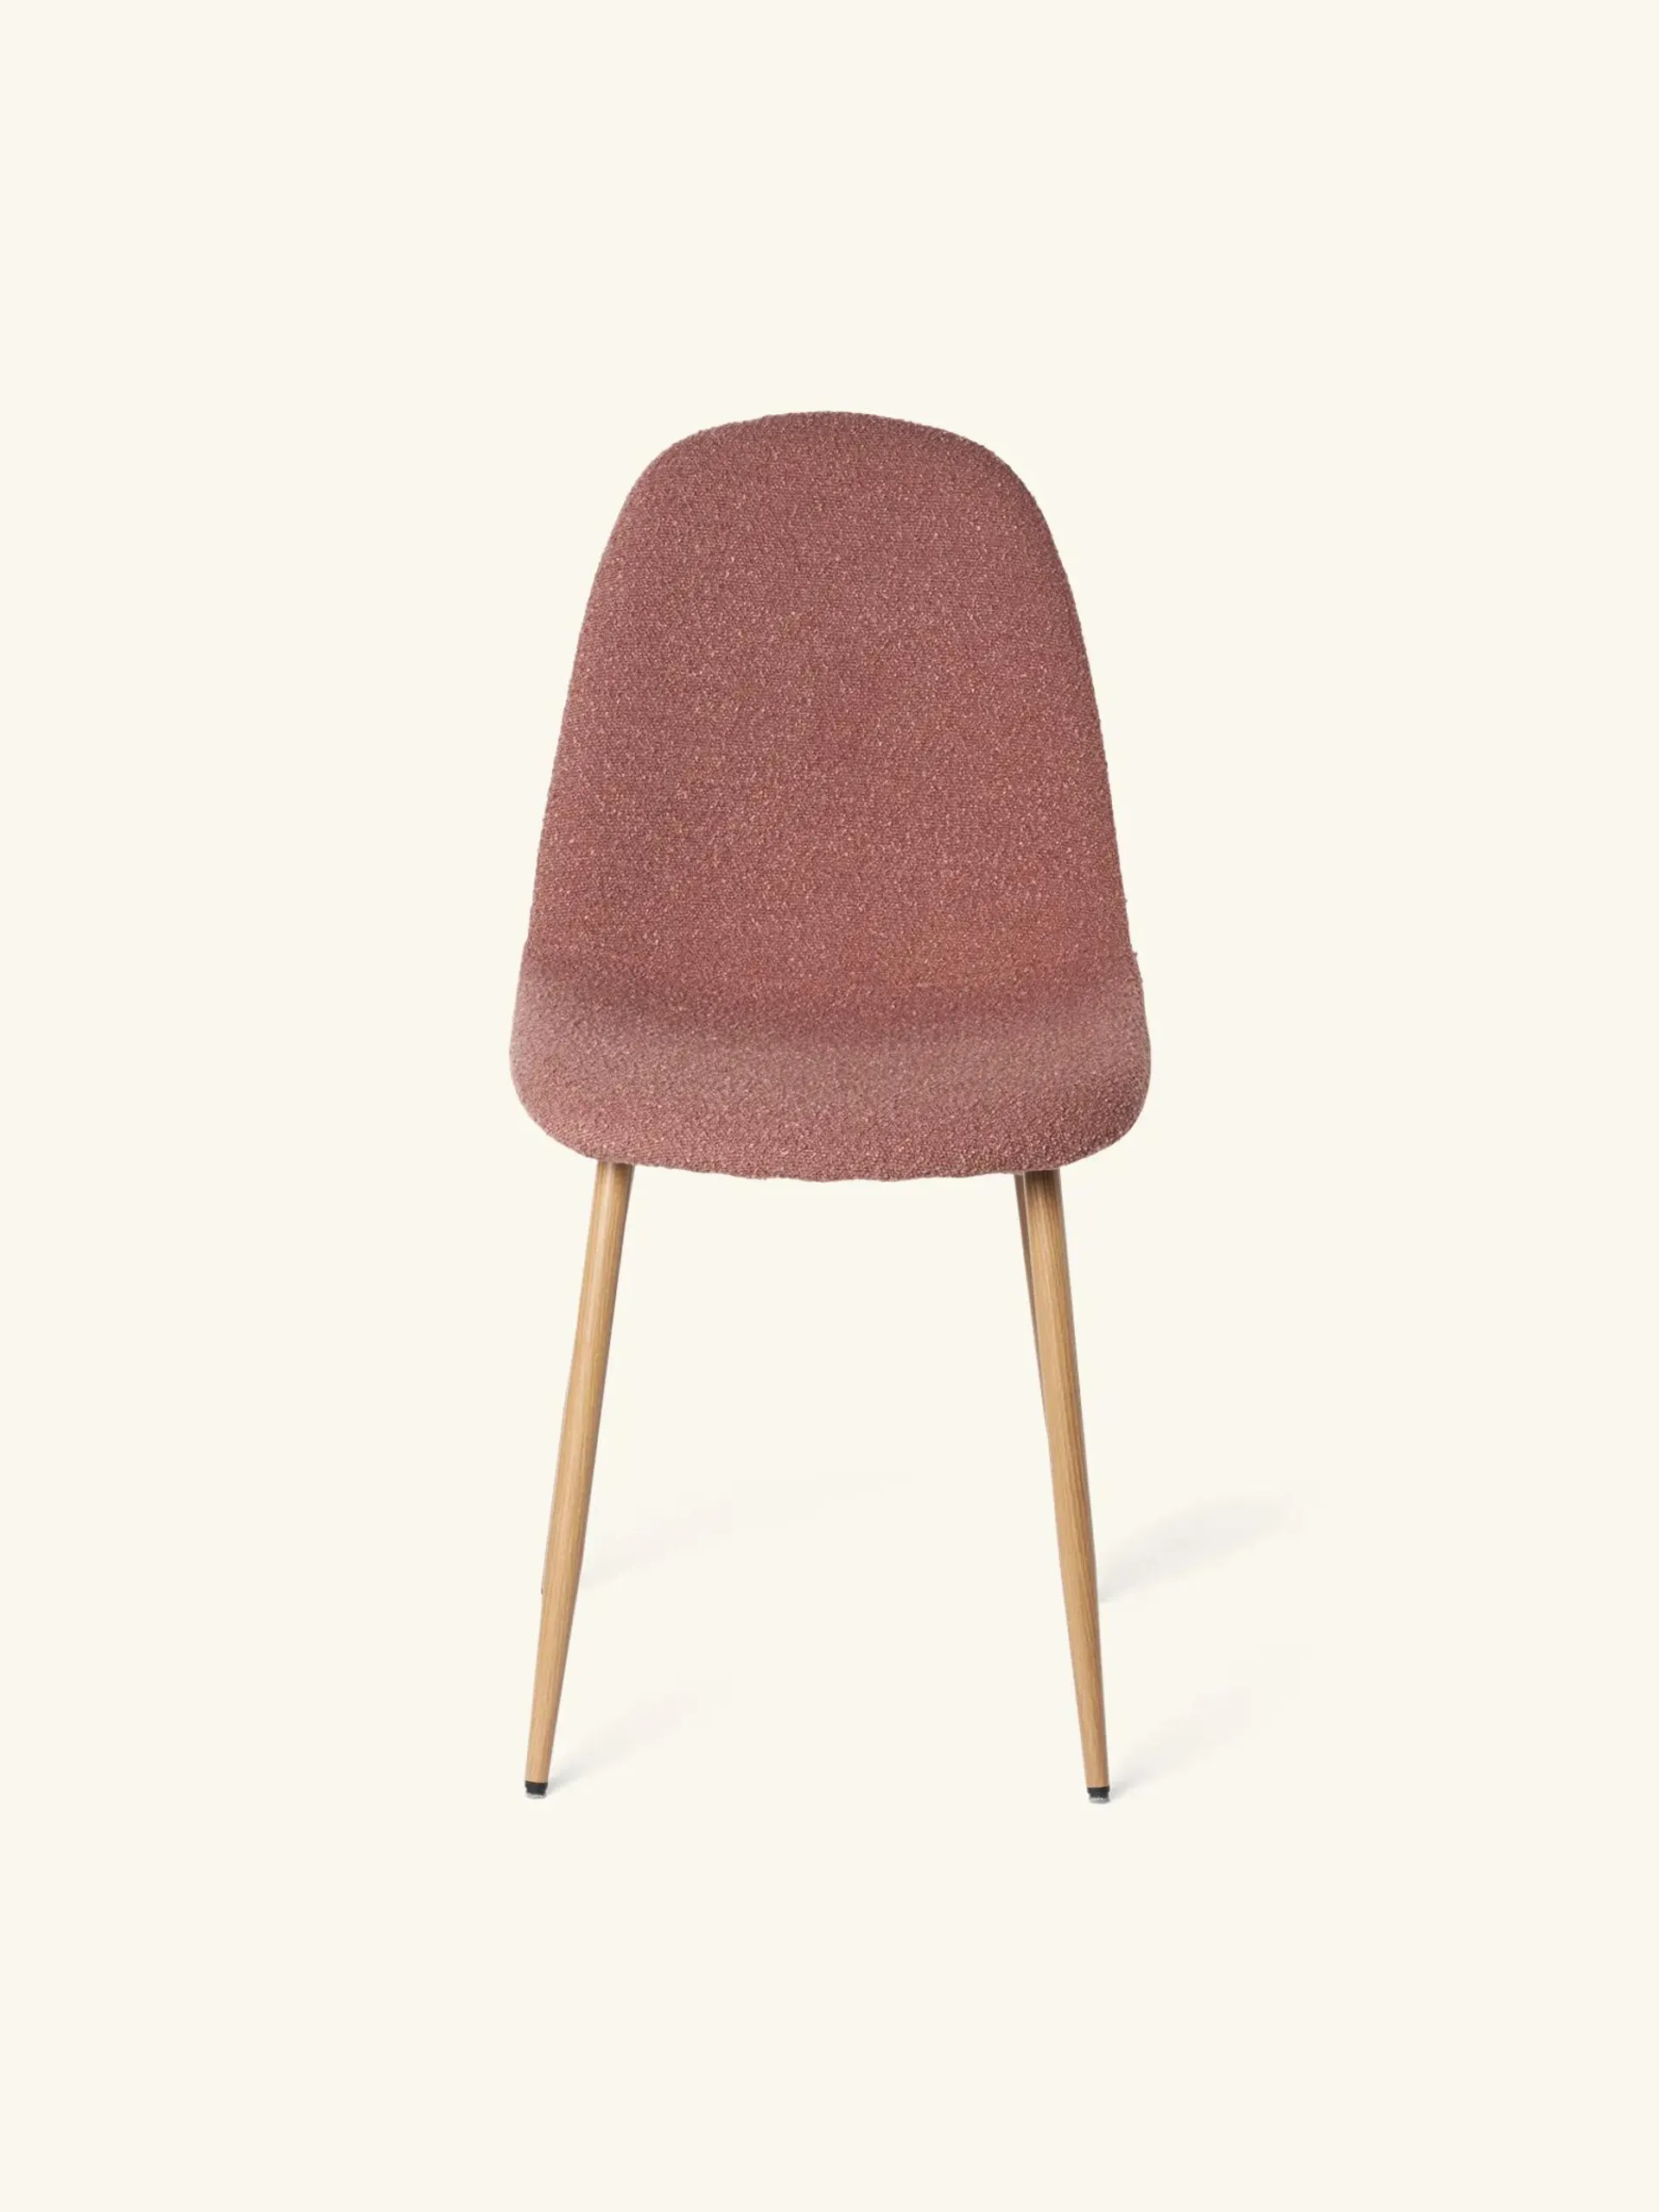 Chair with bouclé fabric